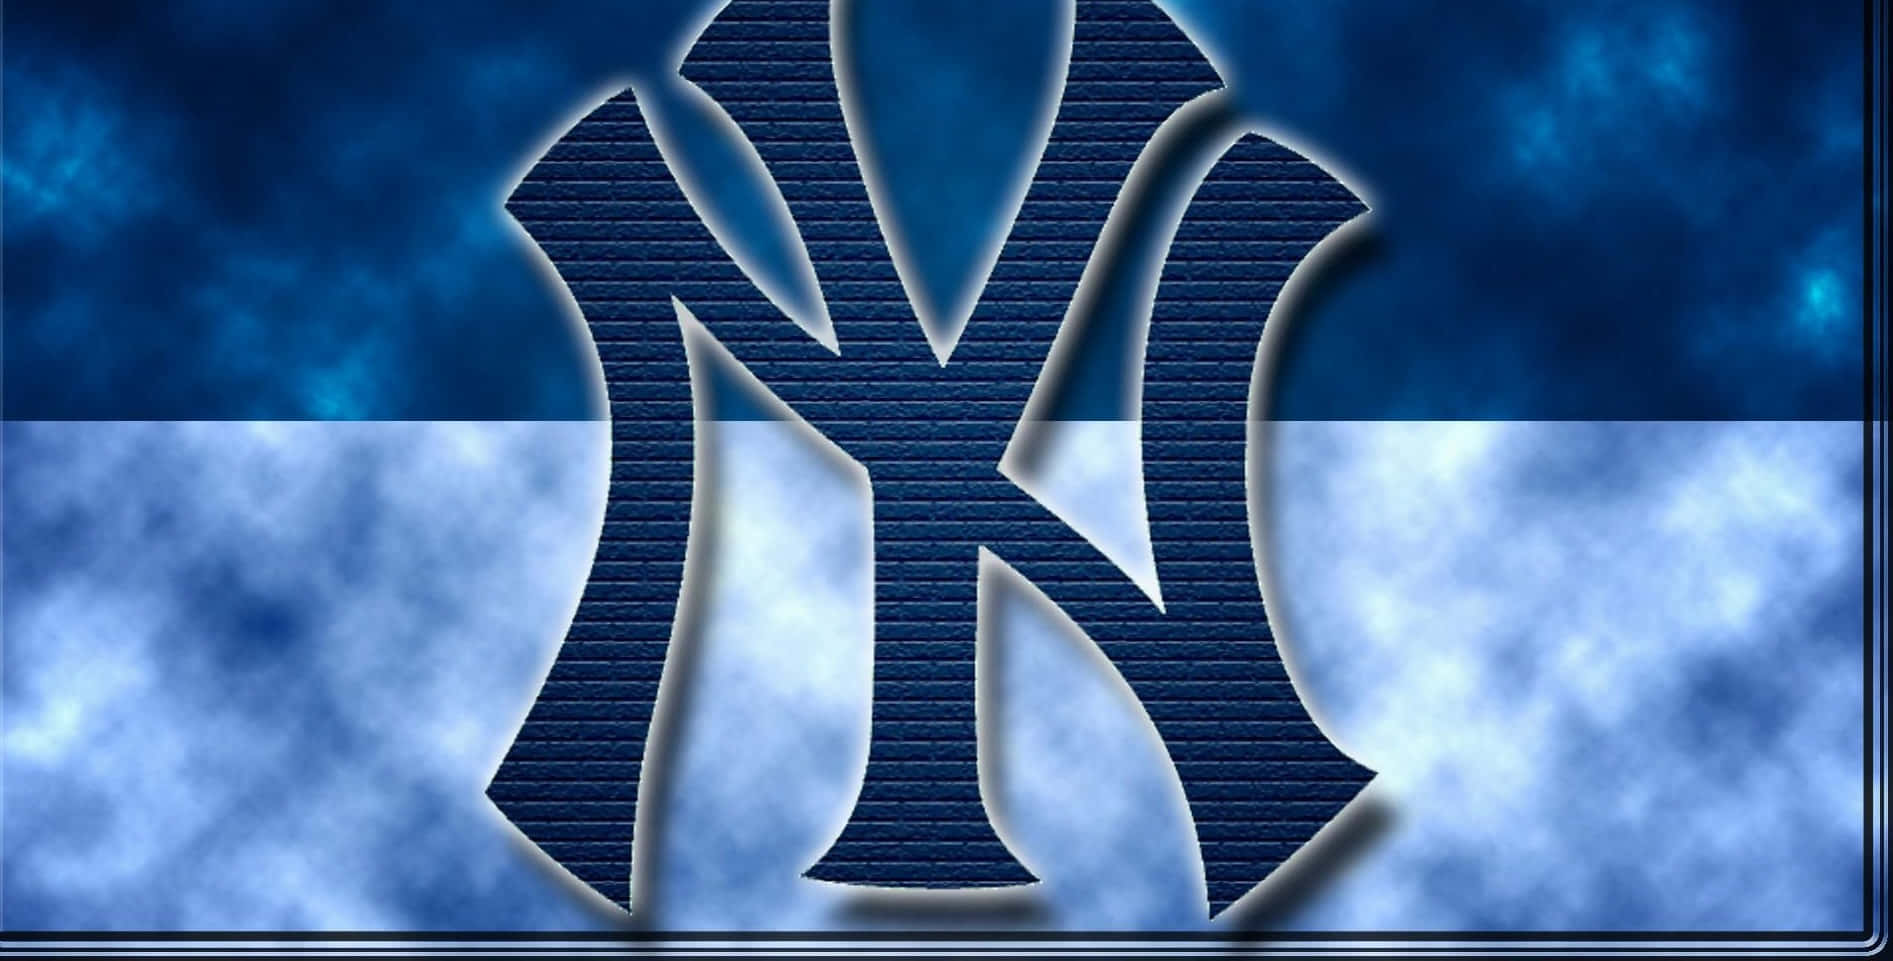 Caption: The New York Yankees logo on a spectacular baseball field backdrop